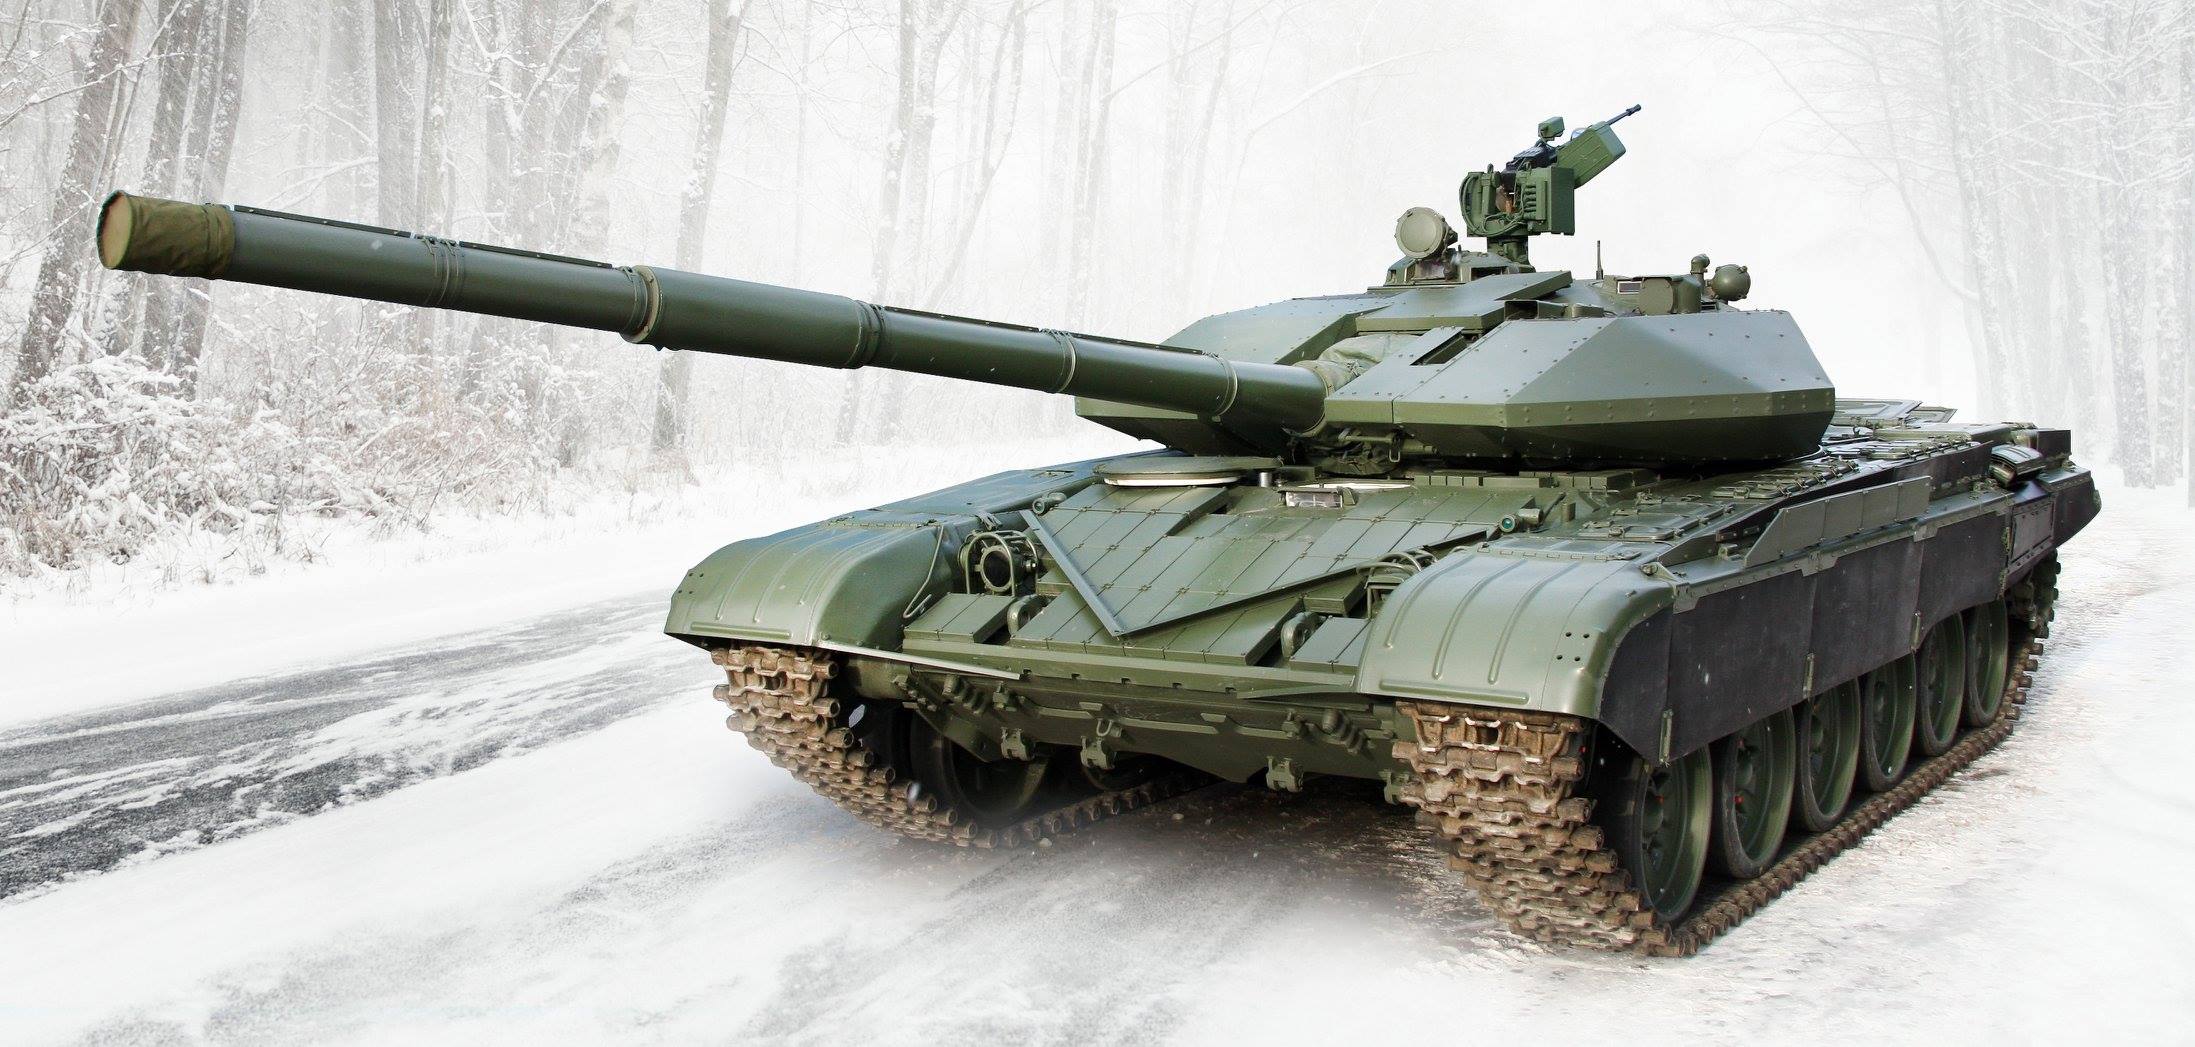 Excalibur Offers T 72 Main Battle Tank Upgrade At Idet 17 Defence Blog